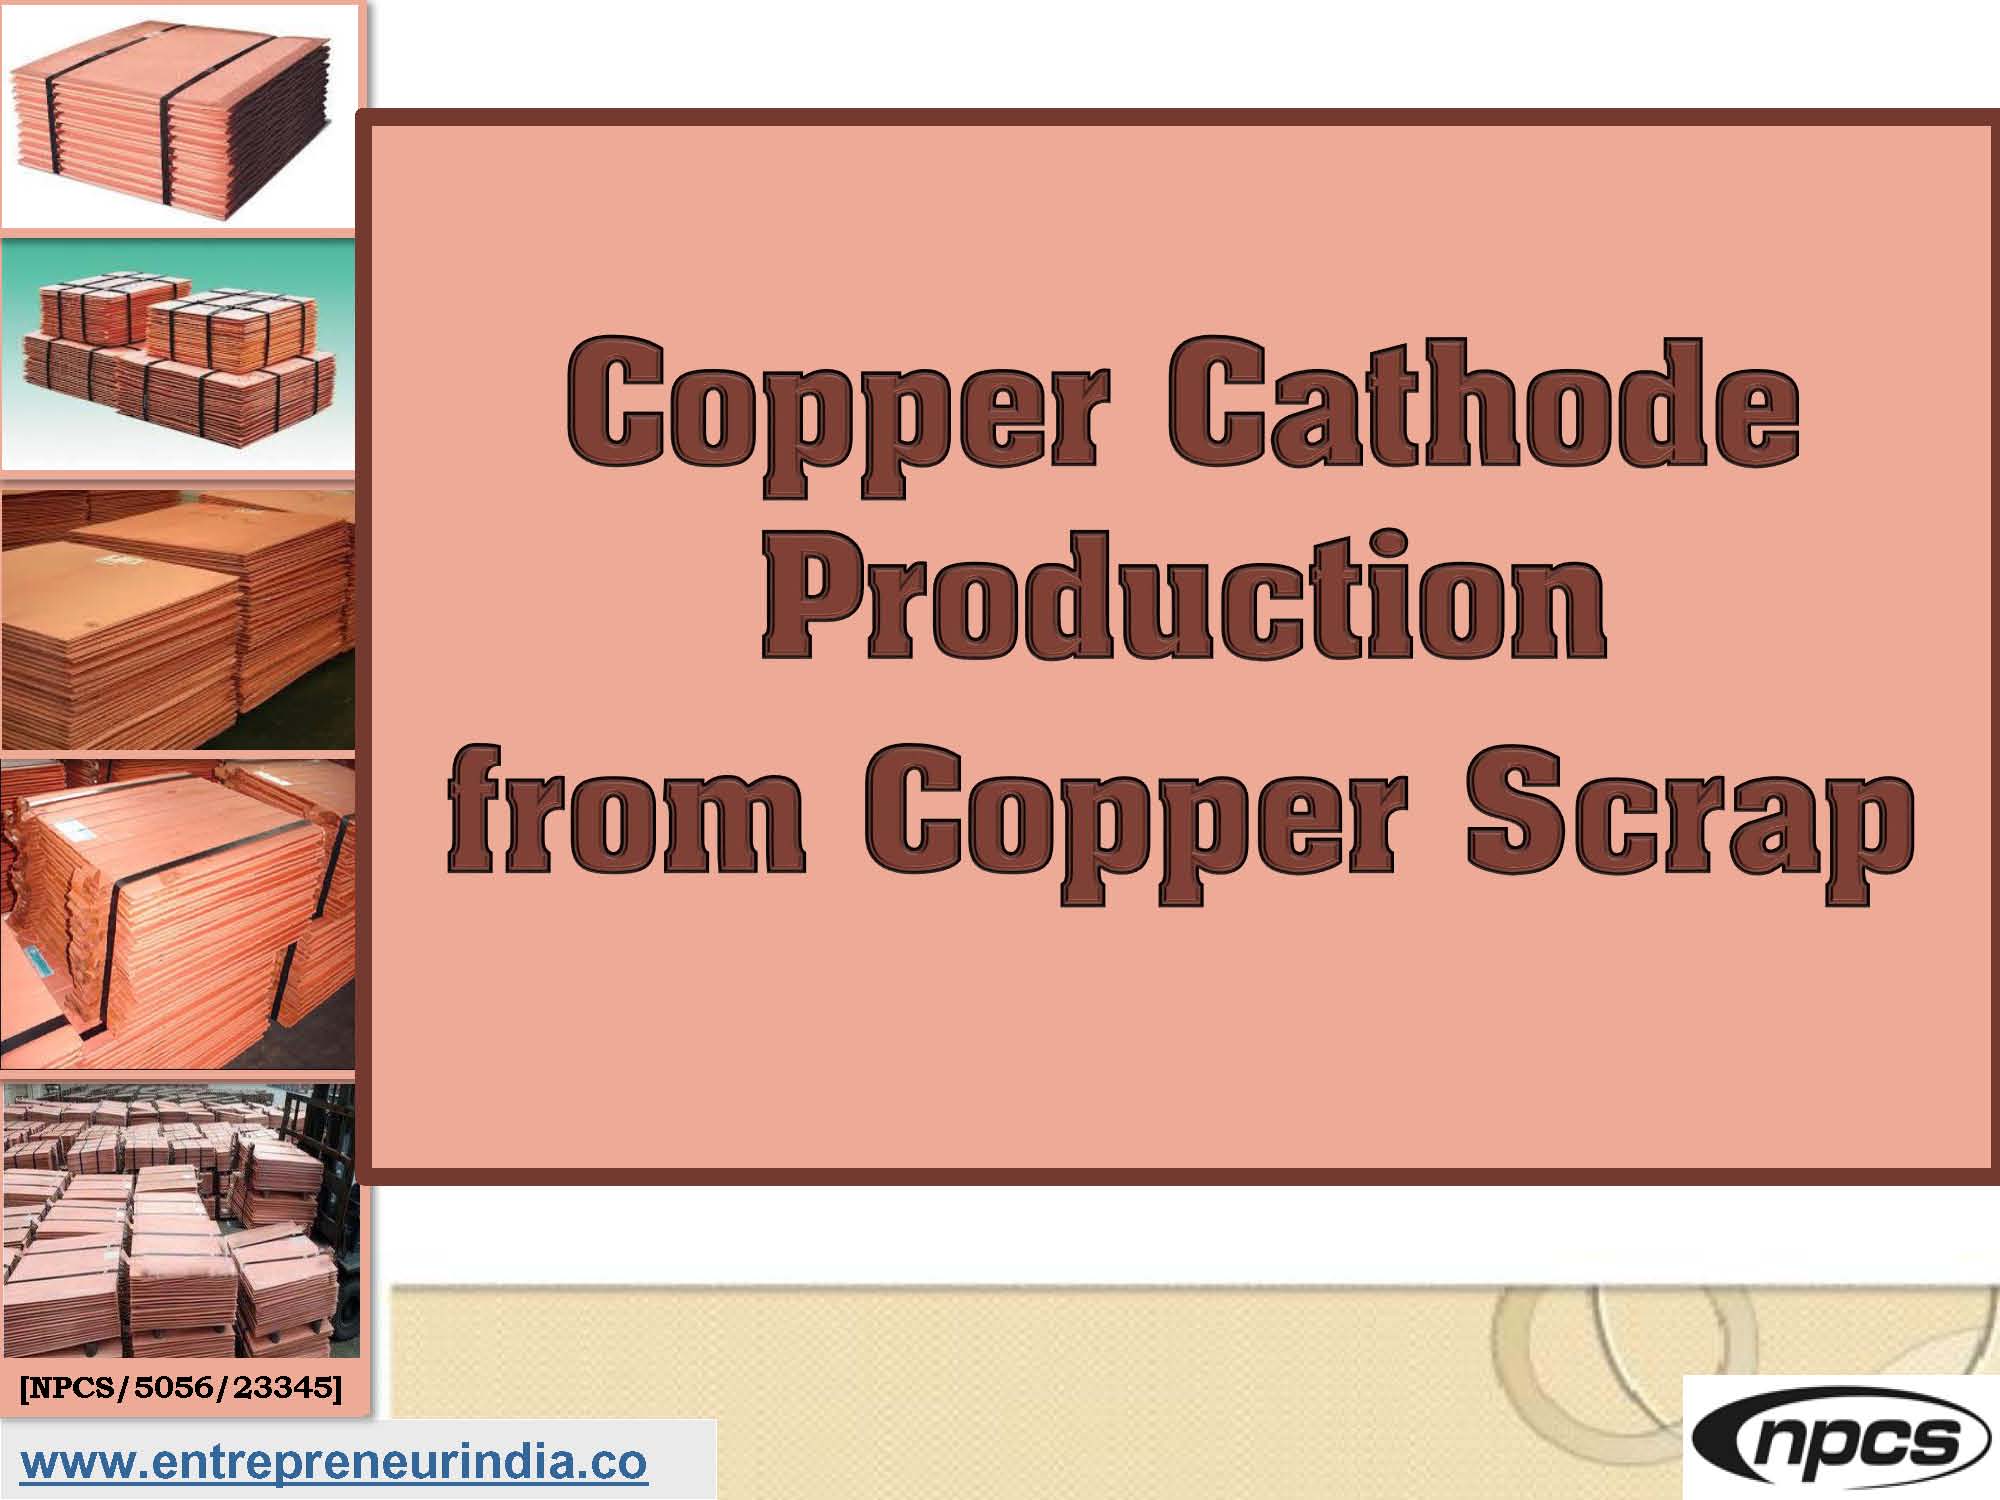 Copper Cathode Production from Copper Scrap